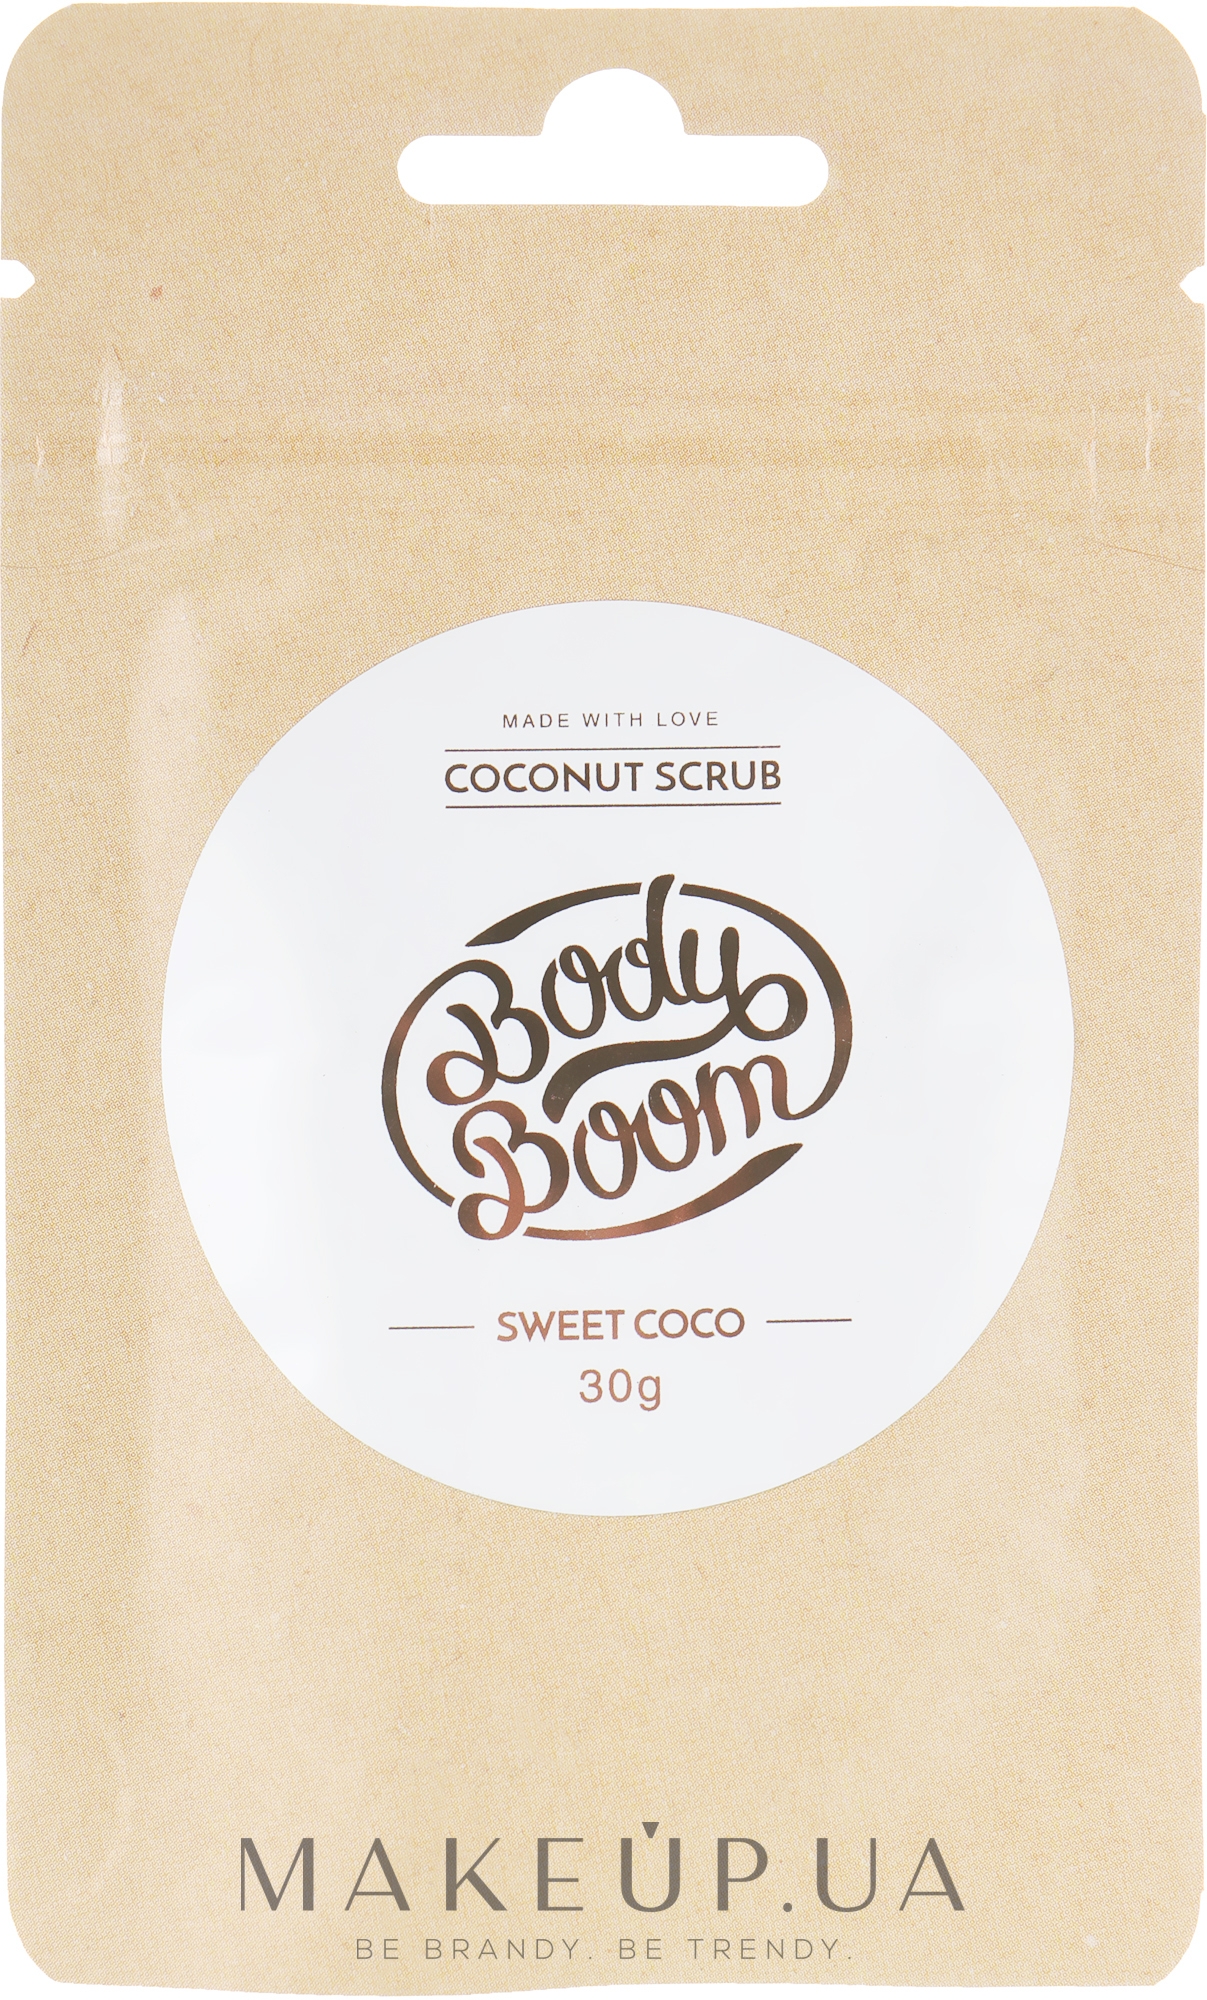 Кокосовый скраб для тела - BodyBoom Coconut Scrub Sweet Coco — фото 30g